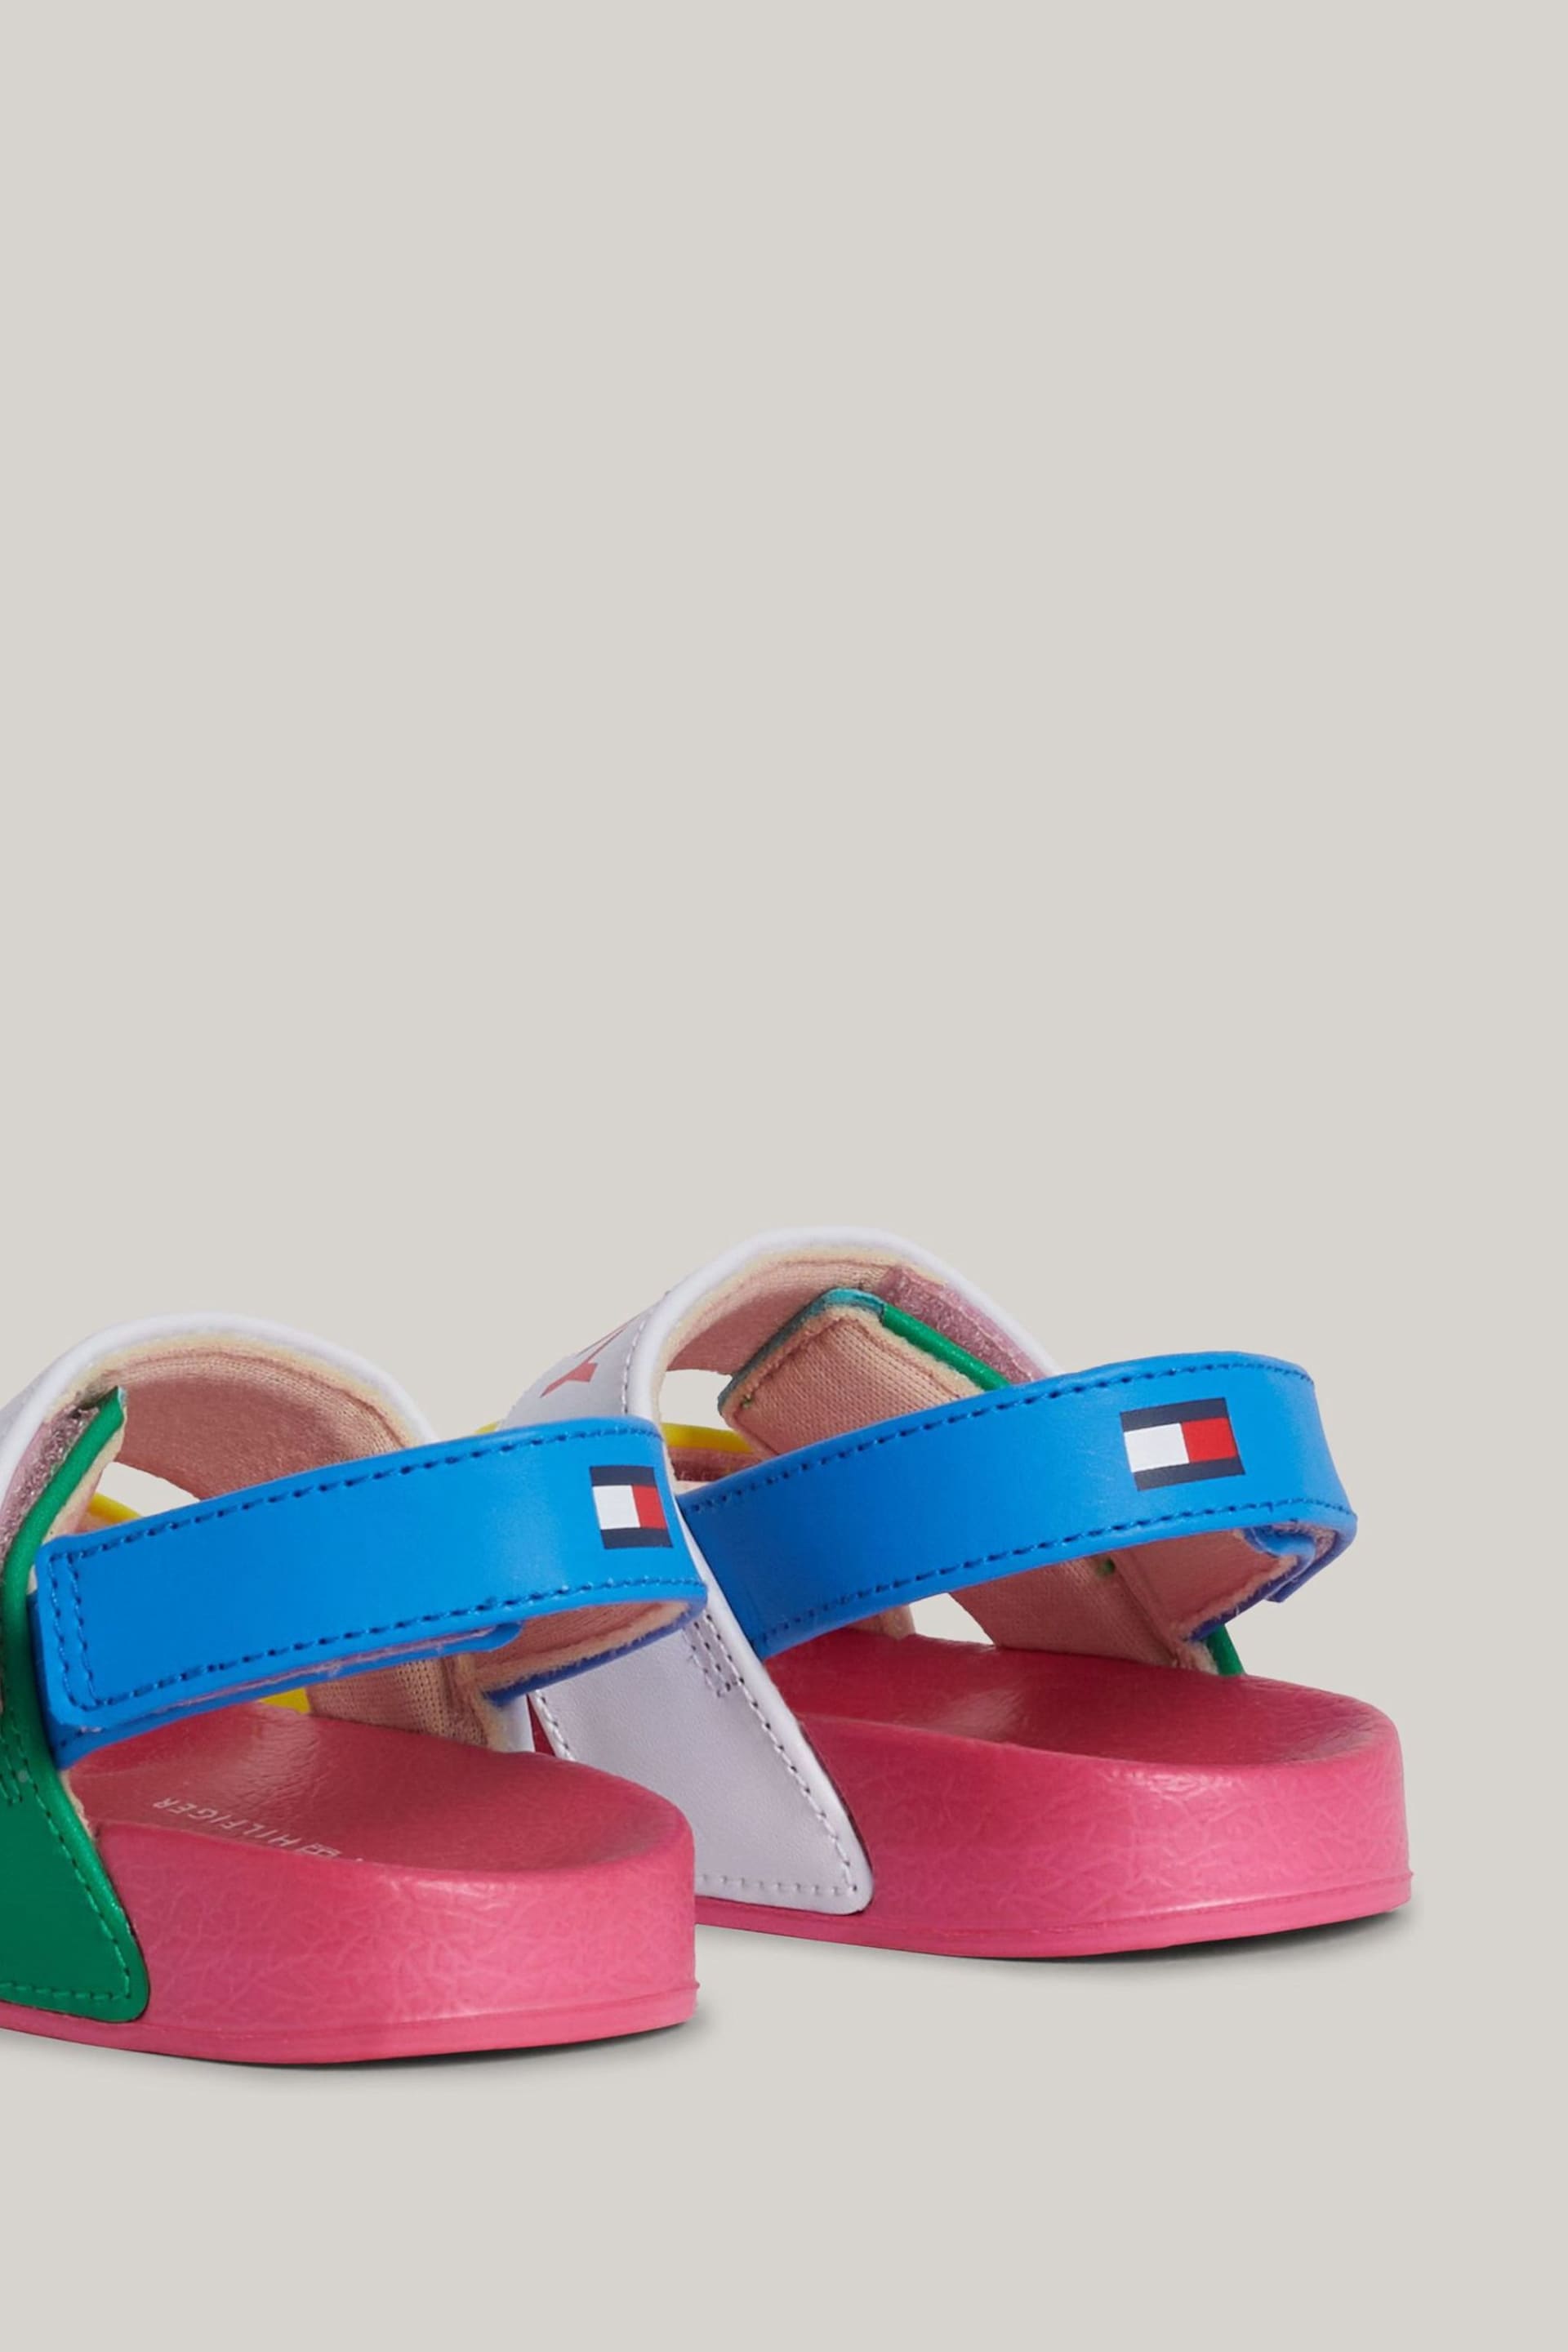 Tommy Hilfiger Velcro Multi Sandals - Image 2 of 5